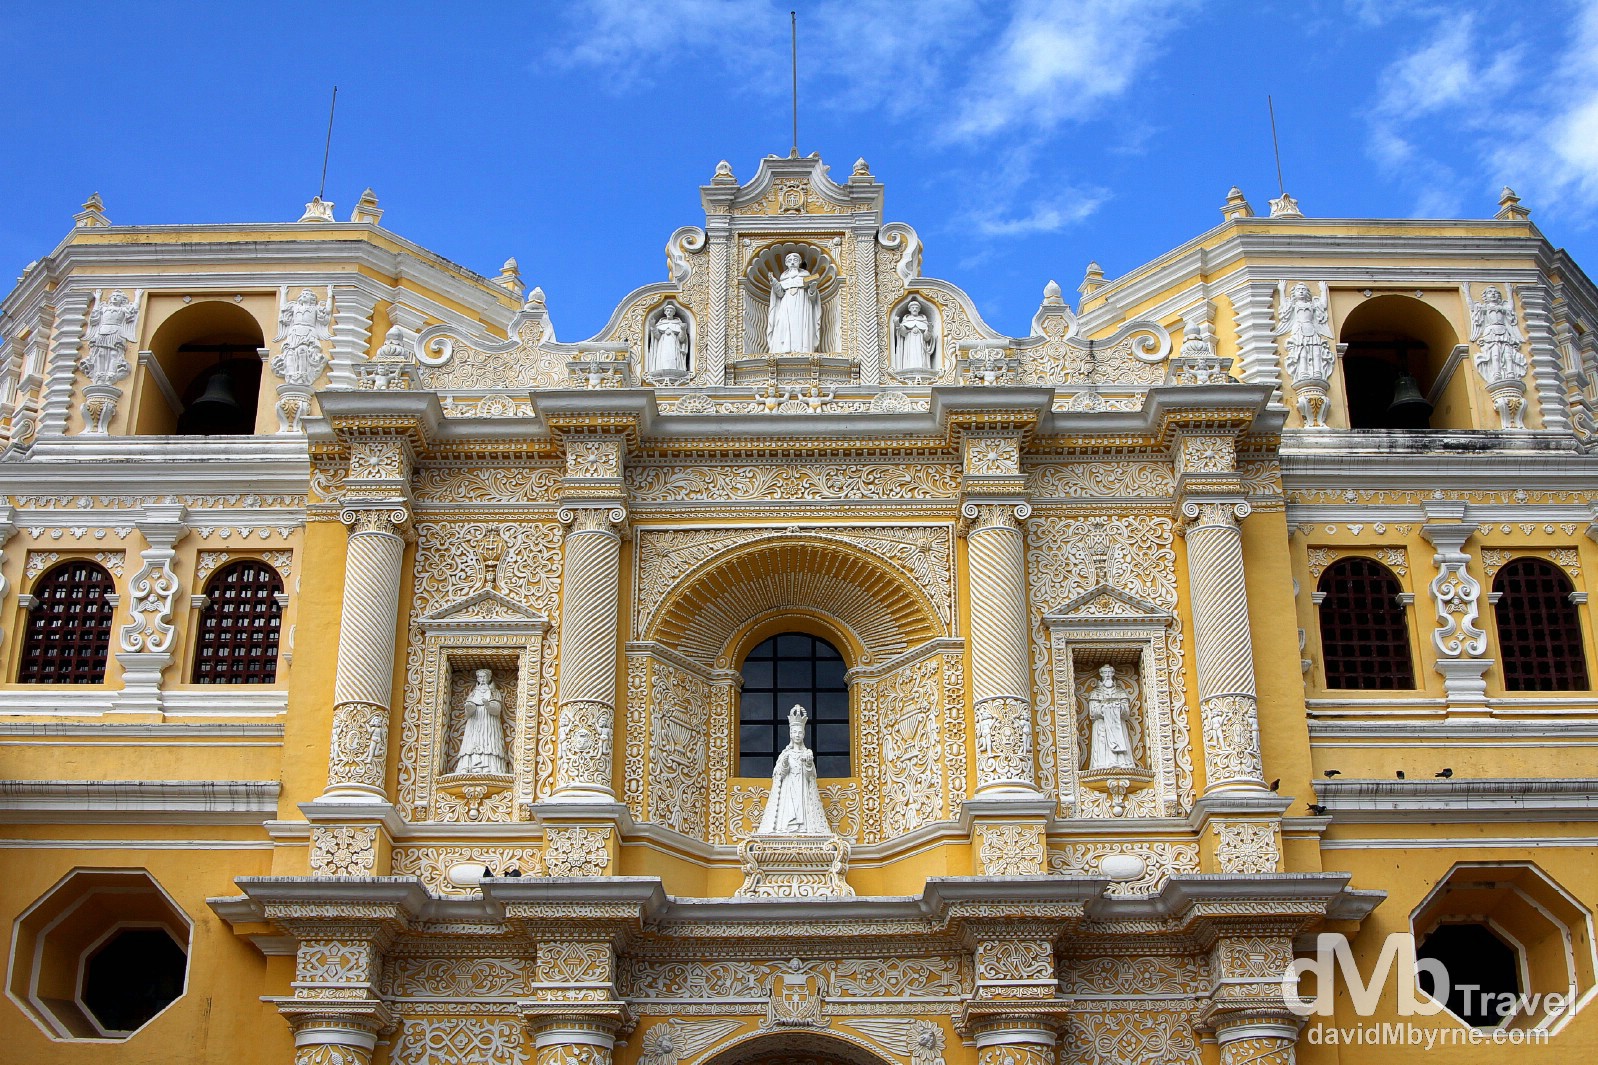 The façade of the Iglesia y Convento de Nuestra Senora de la Merced, Antigua, Guatemala. May 25th 2013.